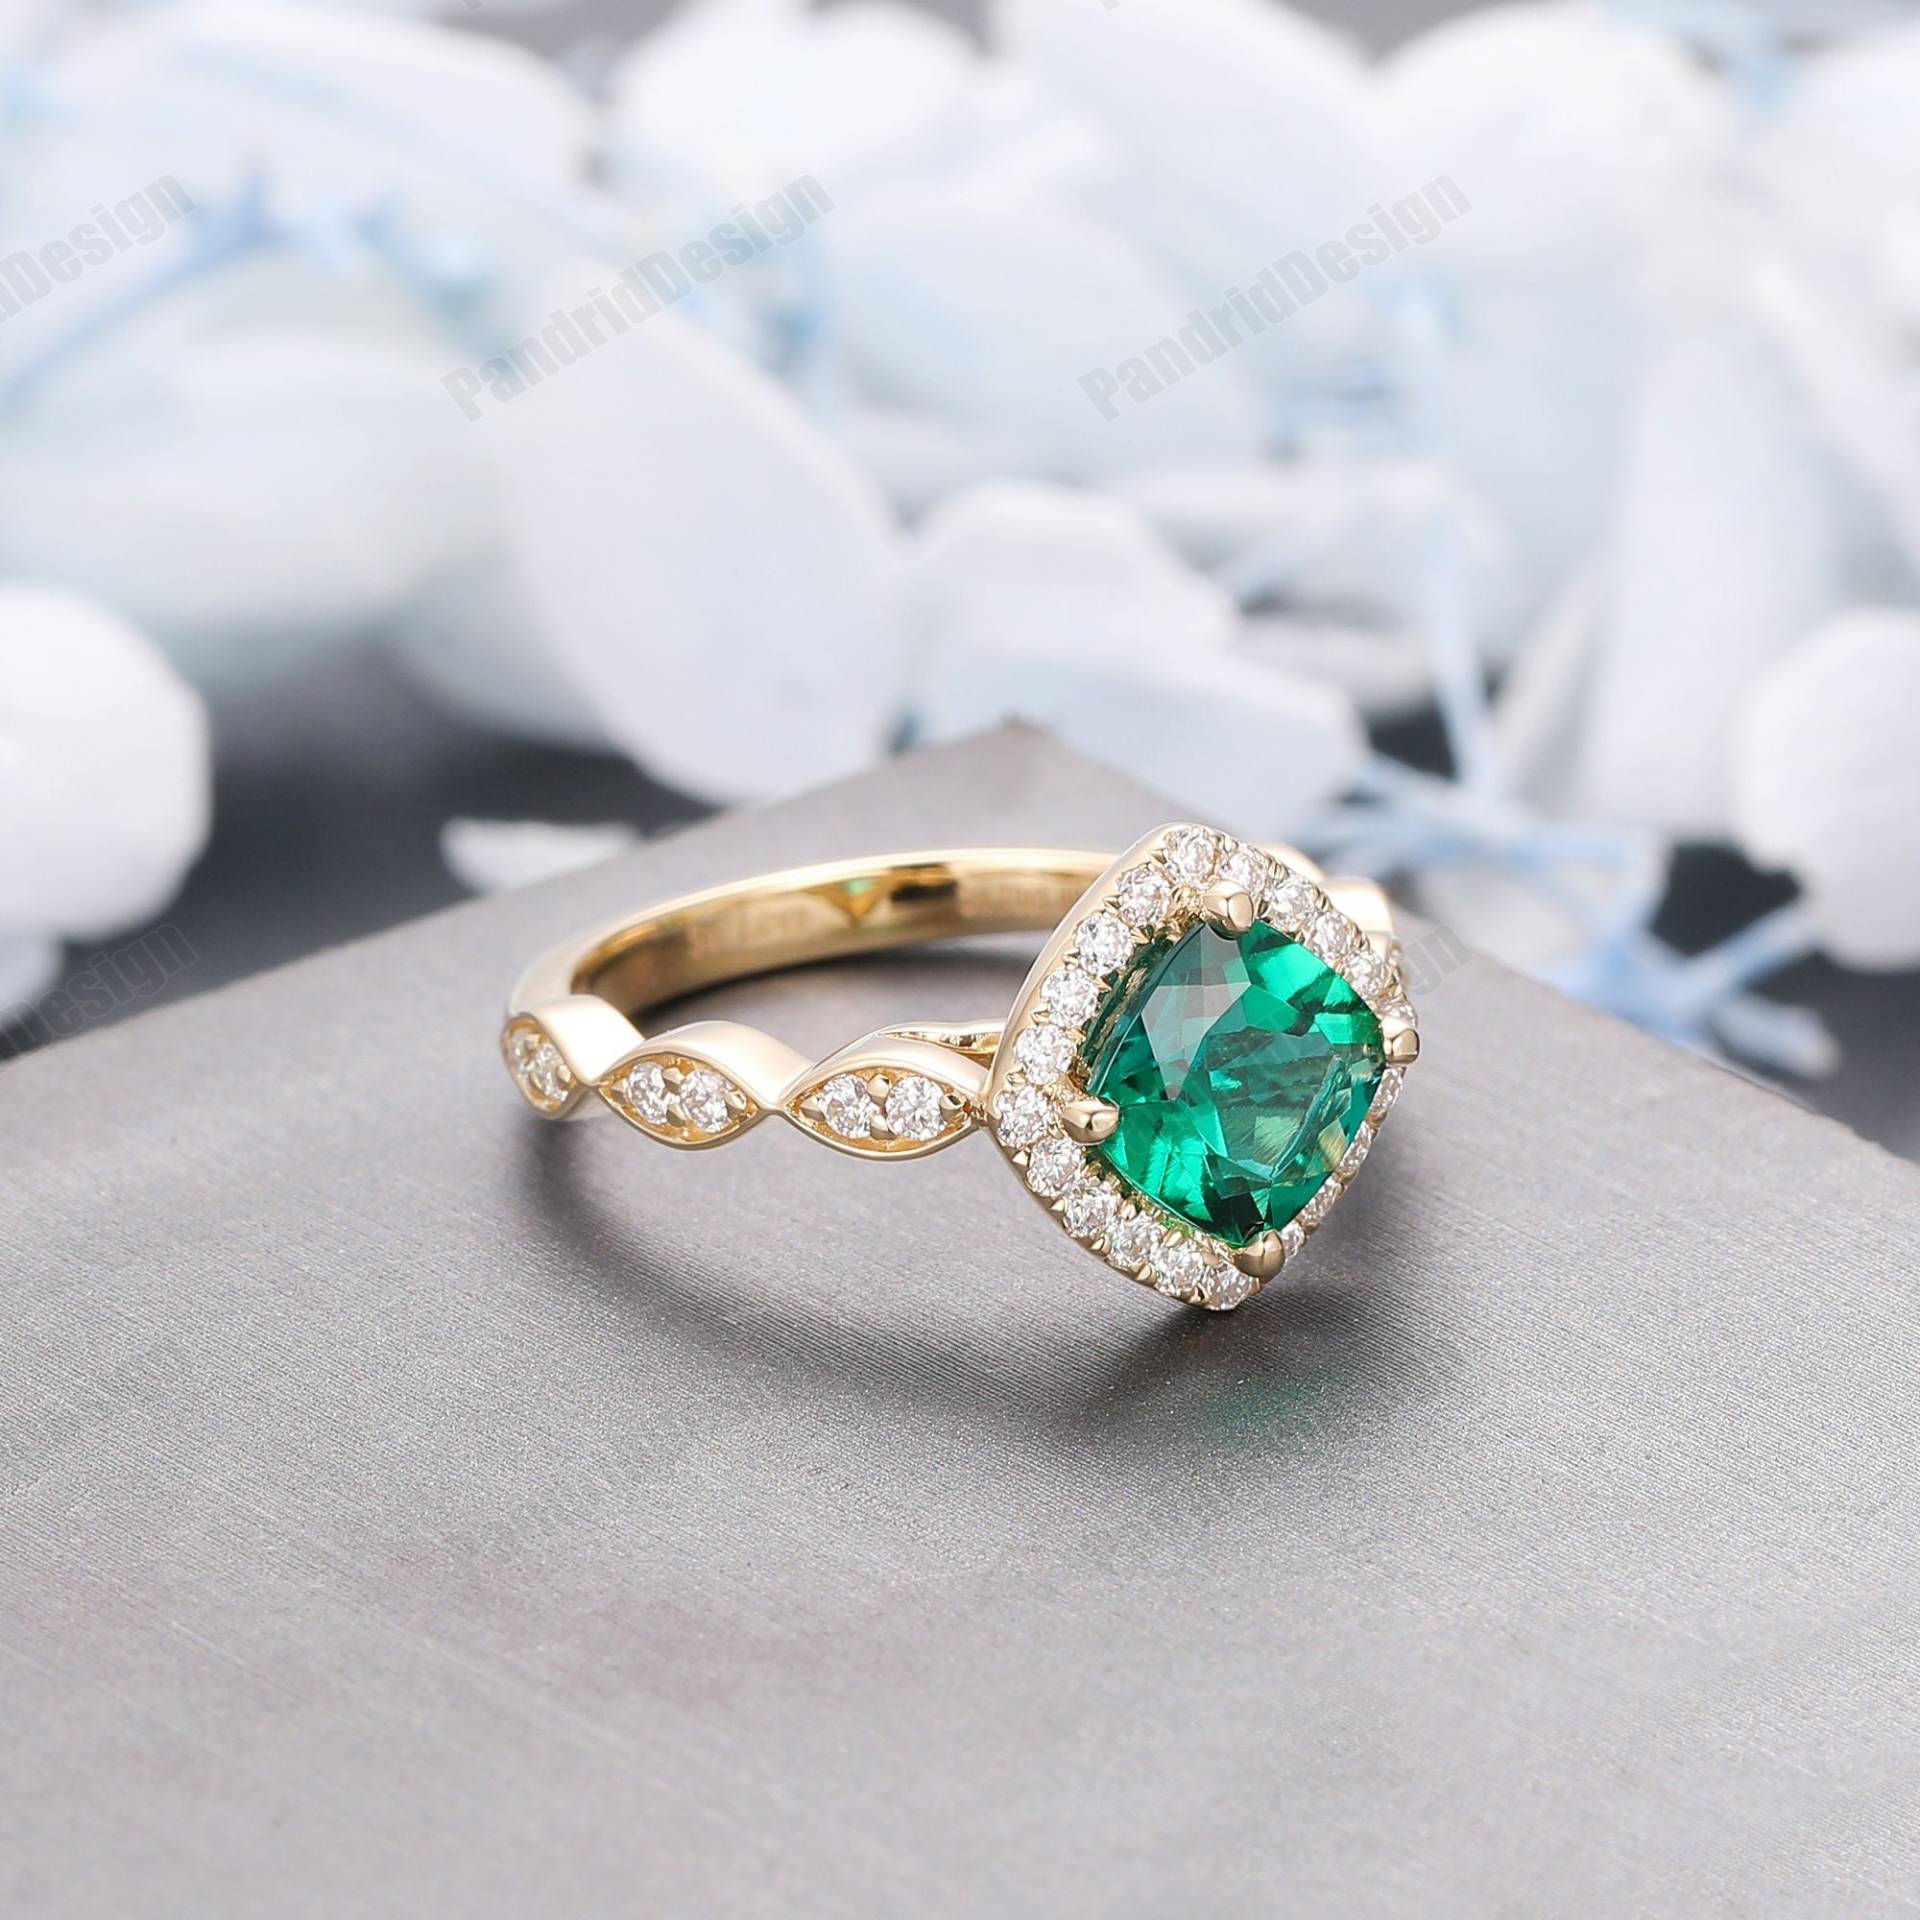 7mm Kissenschliff Grüner Smaragd Ehering Solid Gold Ring, Halo Damen Vintage Verlobungsring, Edelstein Ring von PandridDesign